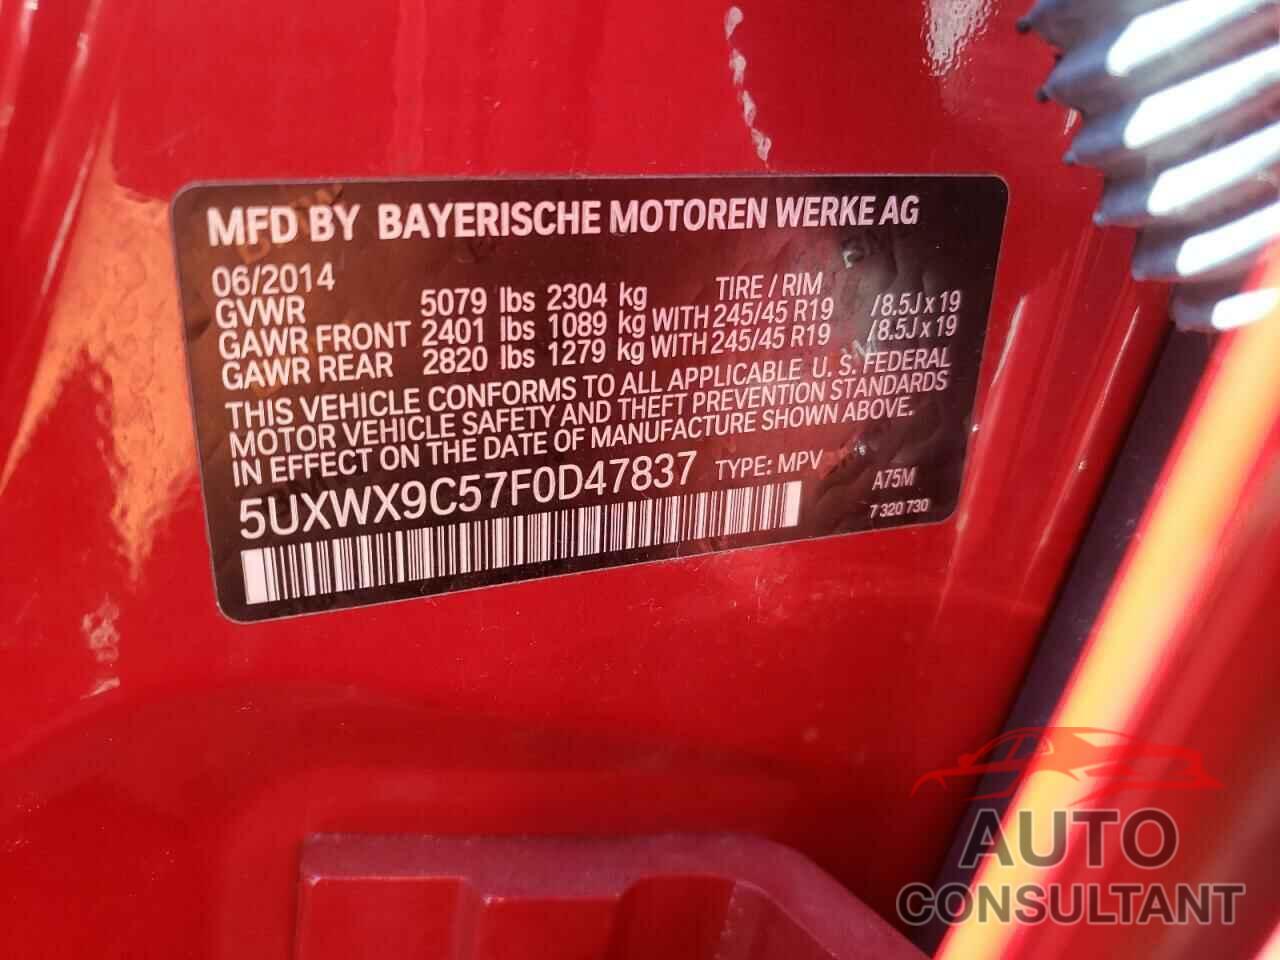 BMW X3 2015 - 5UXWX9C57F0D47837